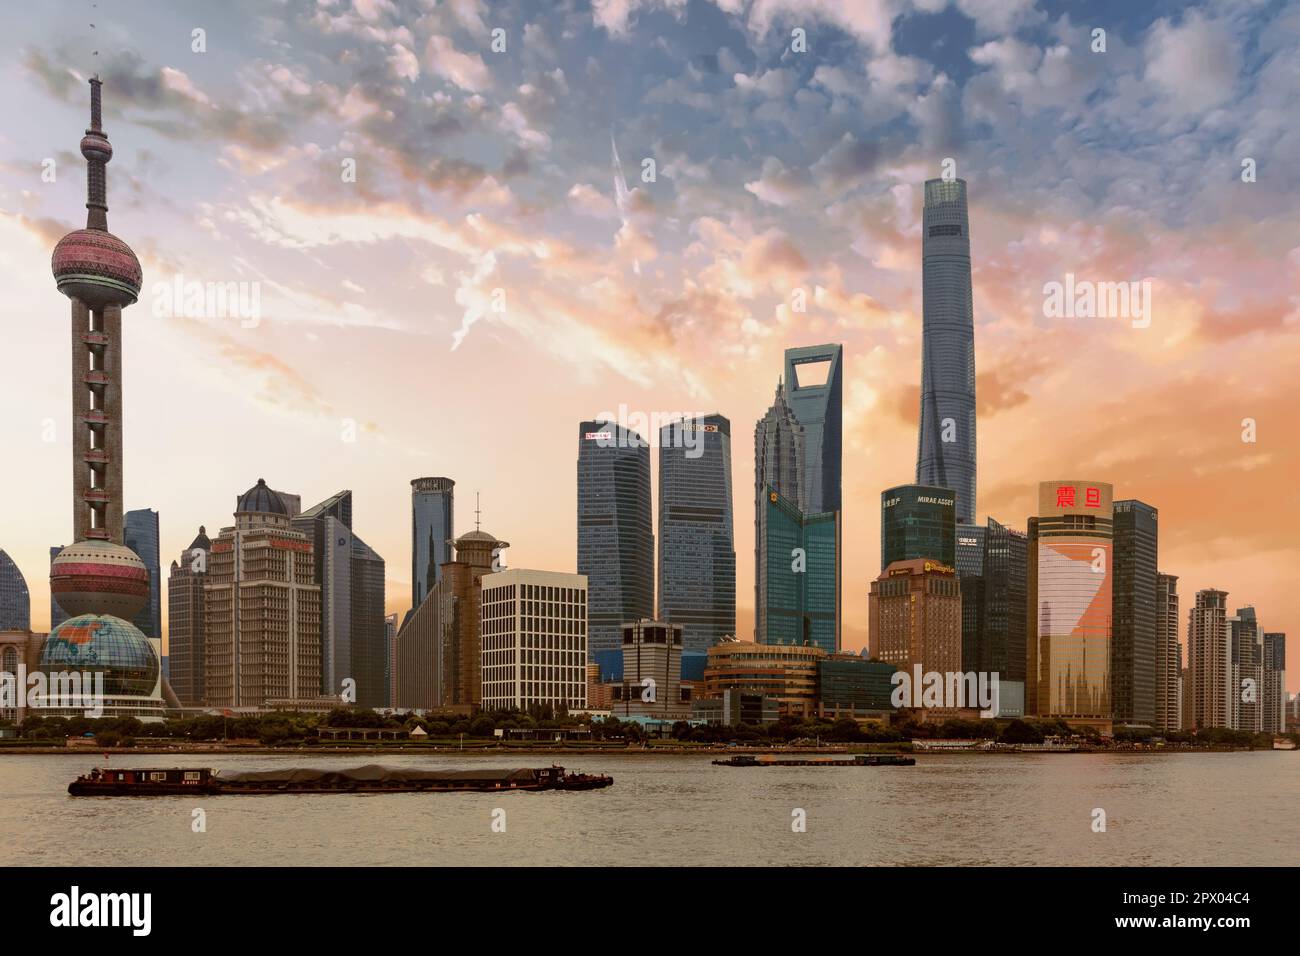 The Shanghai Skyline in China Stock Photo